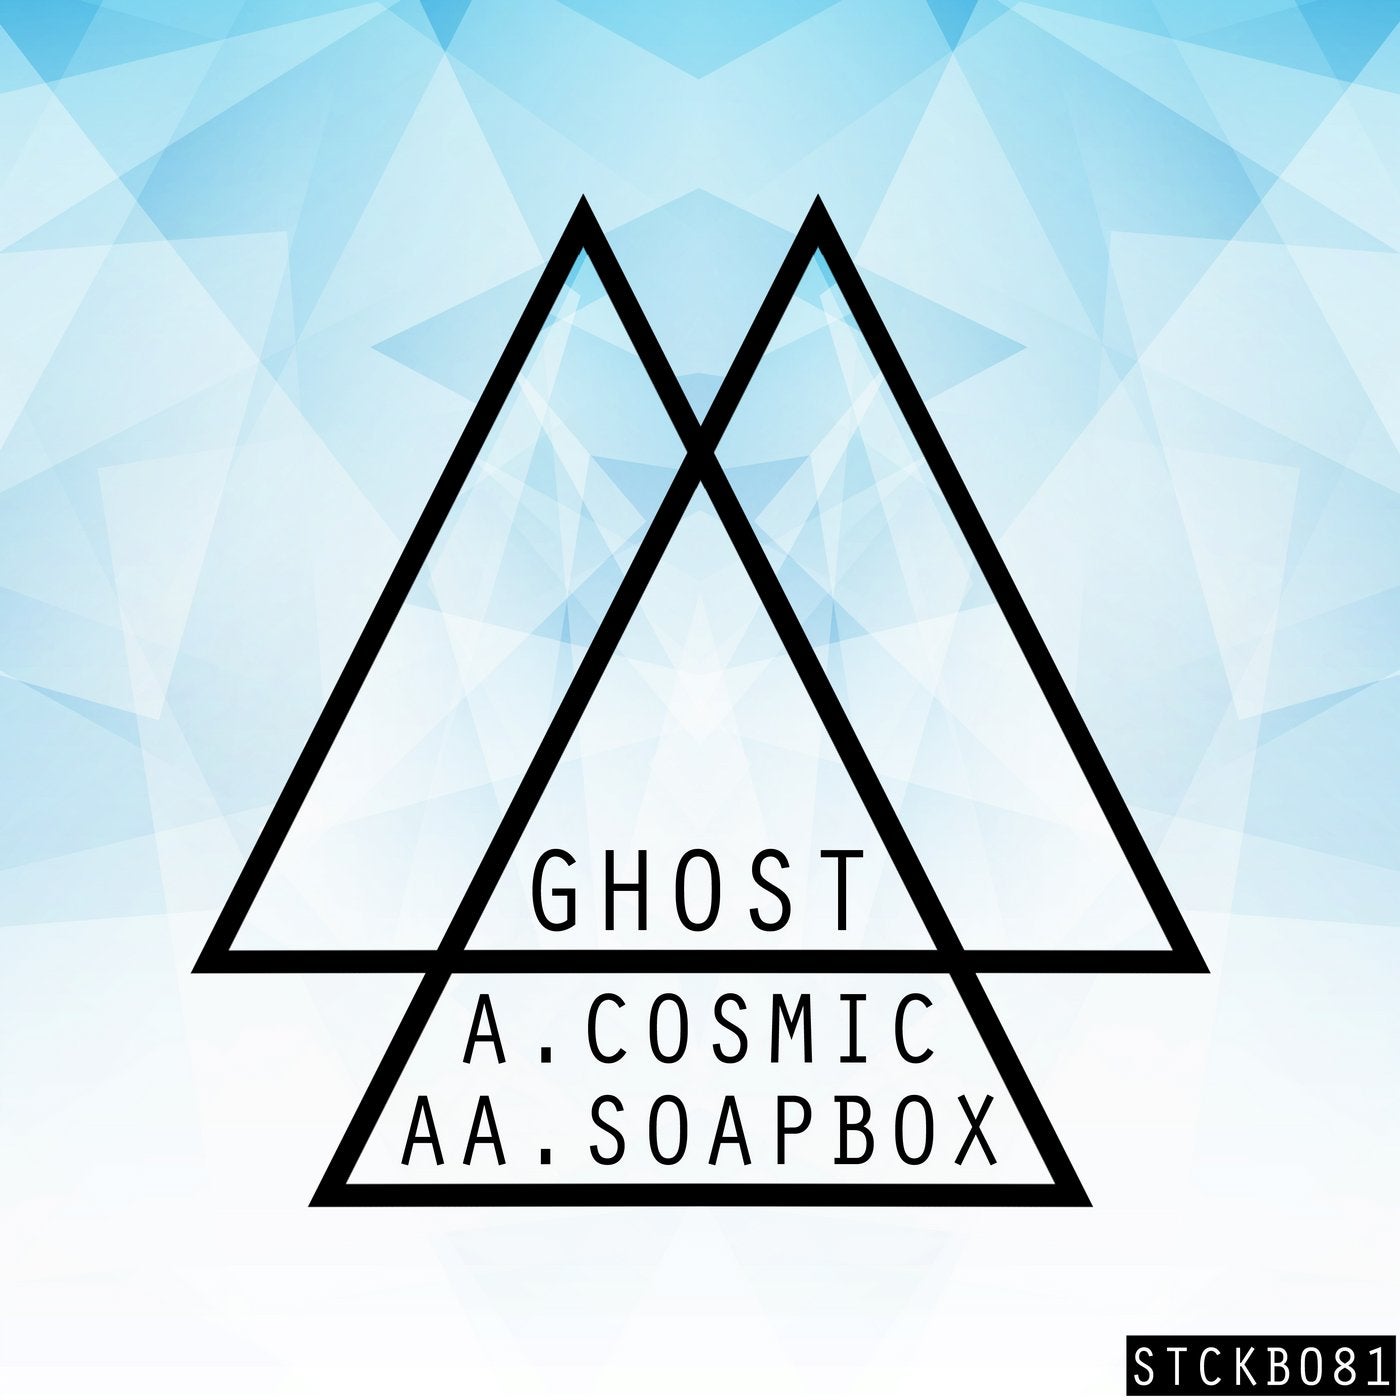 Cosmic / Soapbox